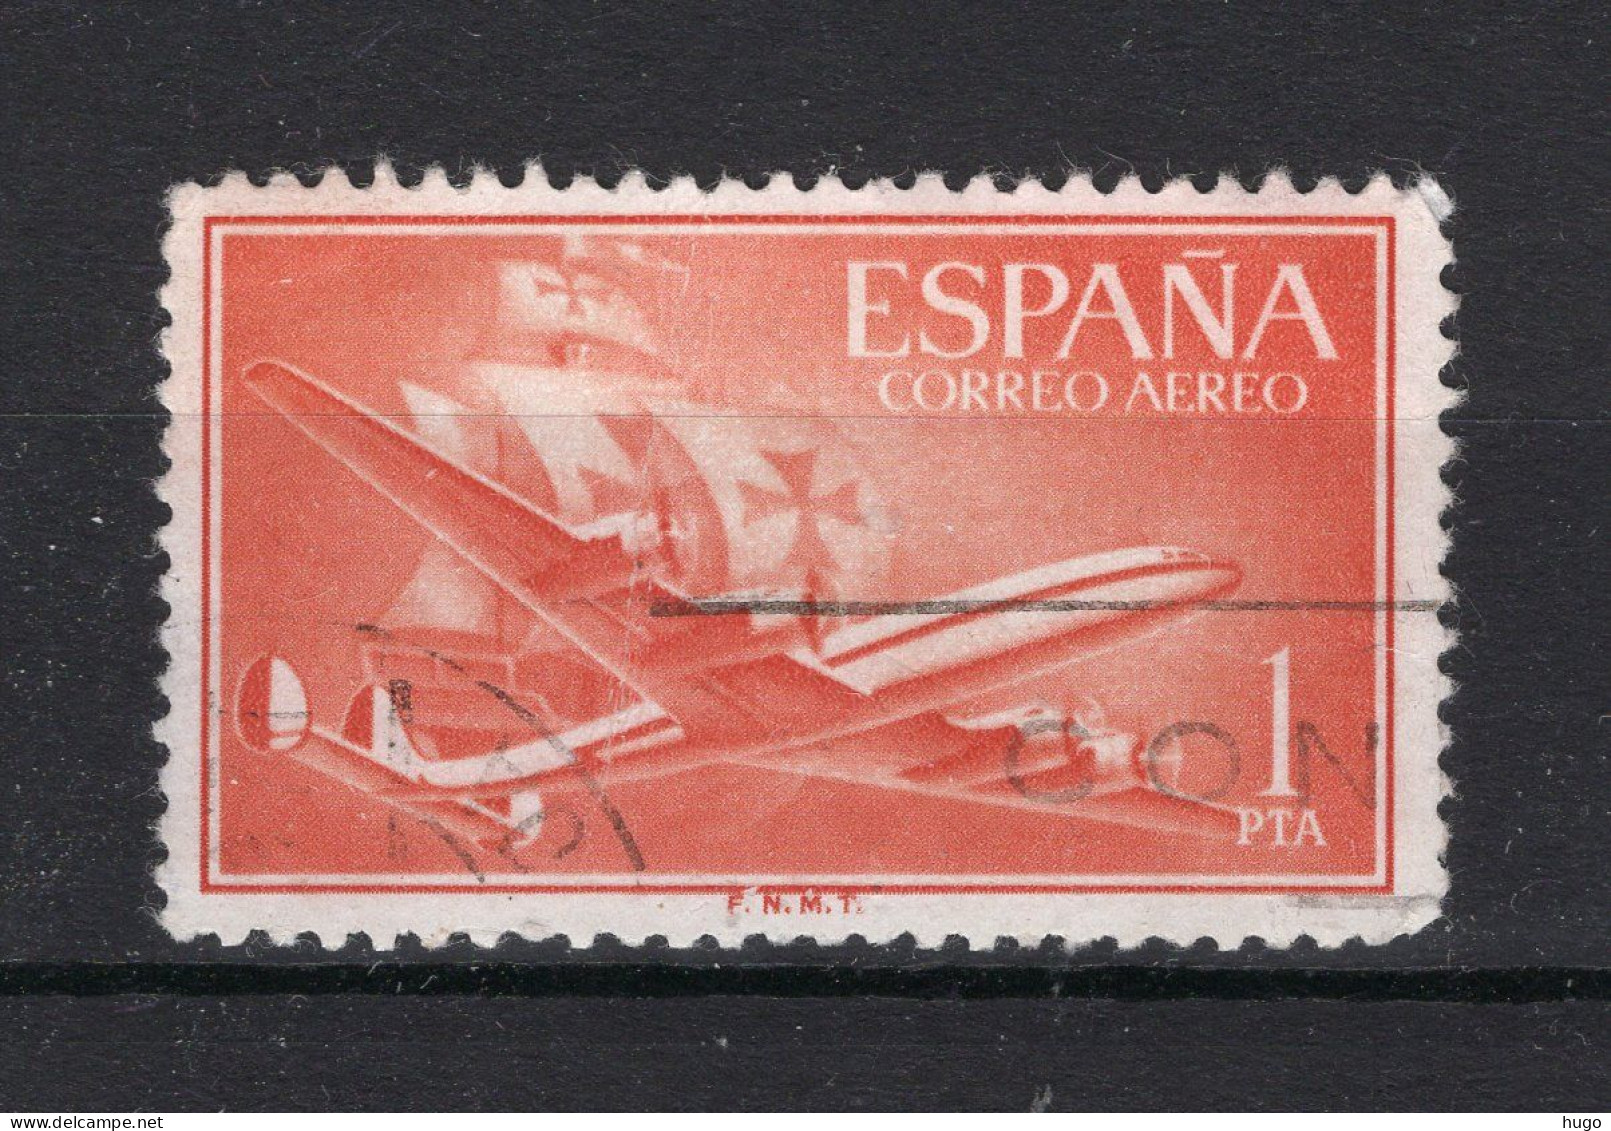 SPANJE Yt. PA269° Gestempeld Luchtpost 1955-1956 - Gebruikt